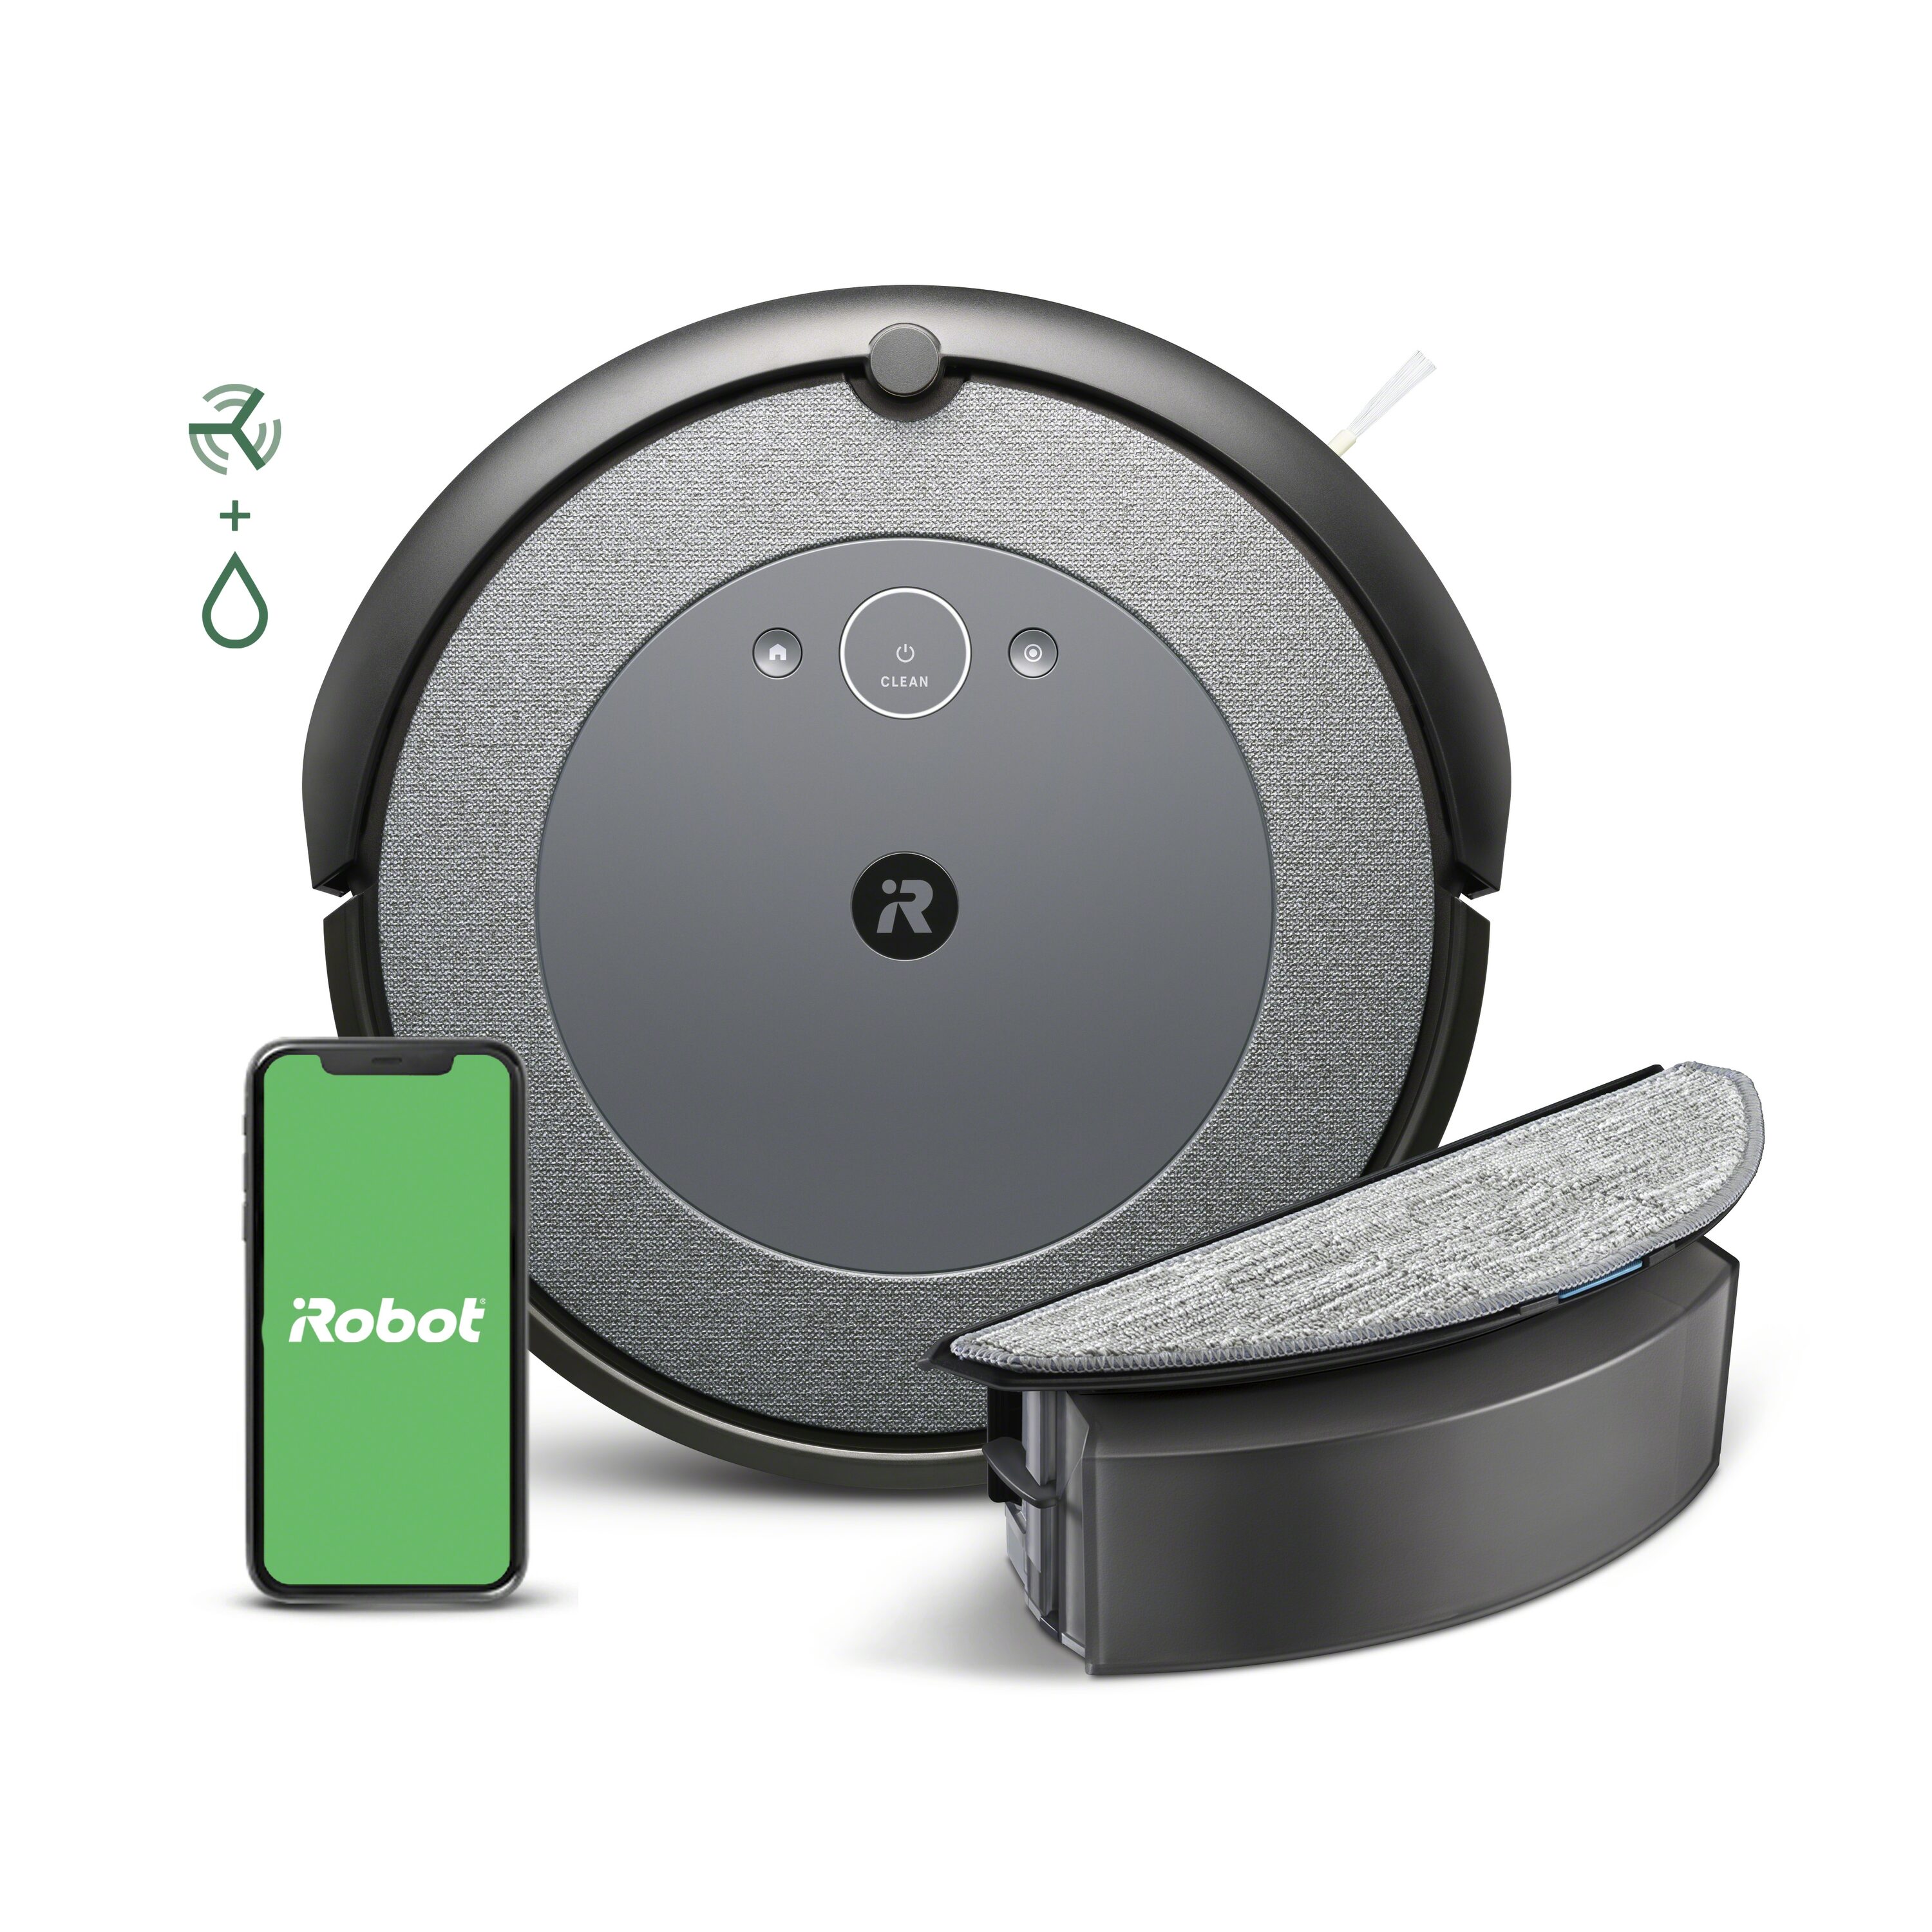  iRobot Roomba E5 (5150) Robot Vacuum - Wi-Fi